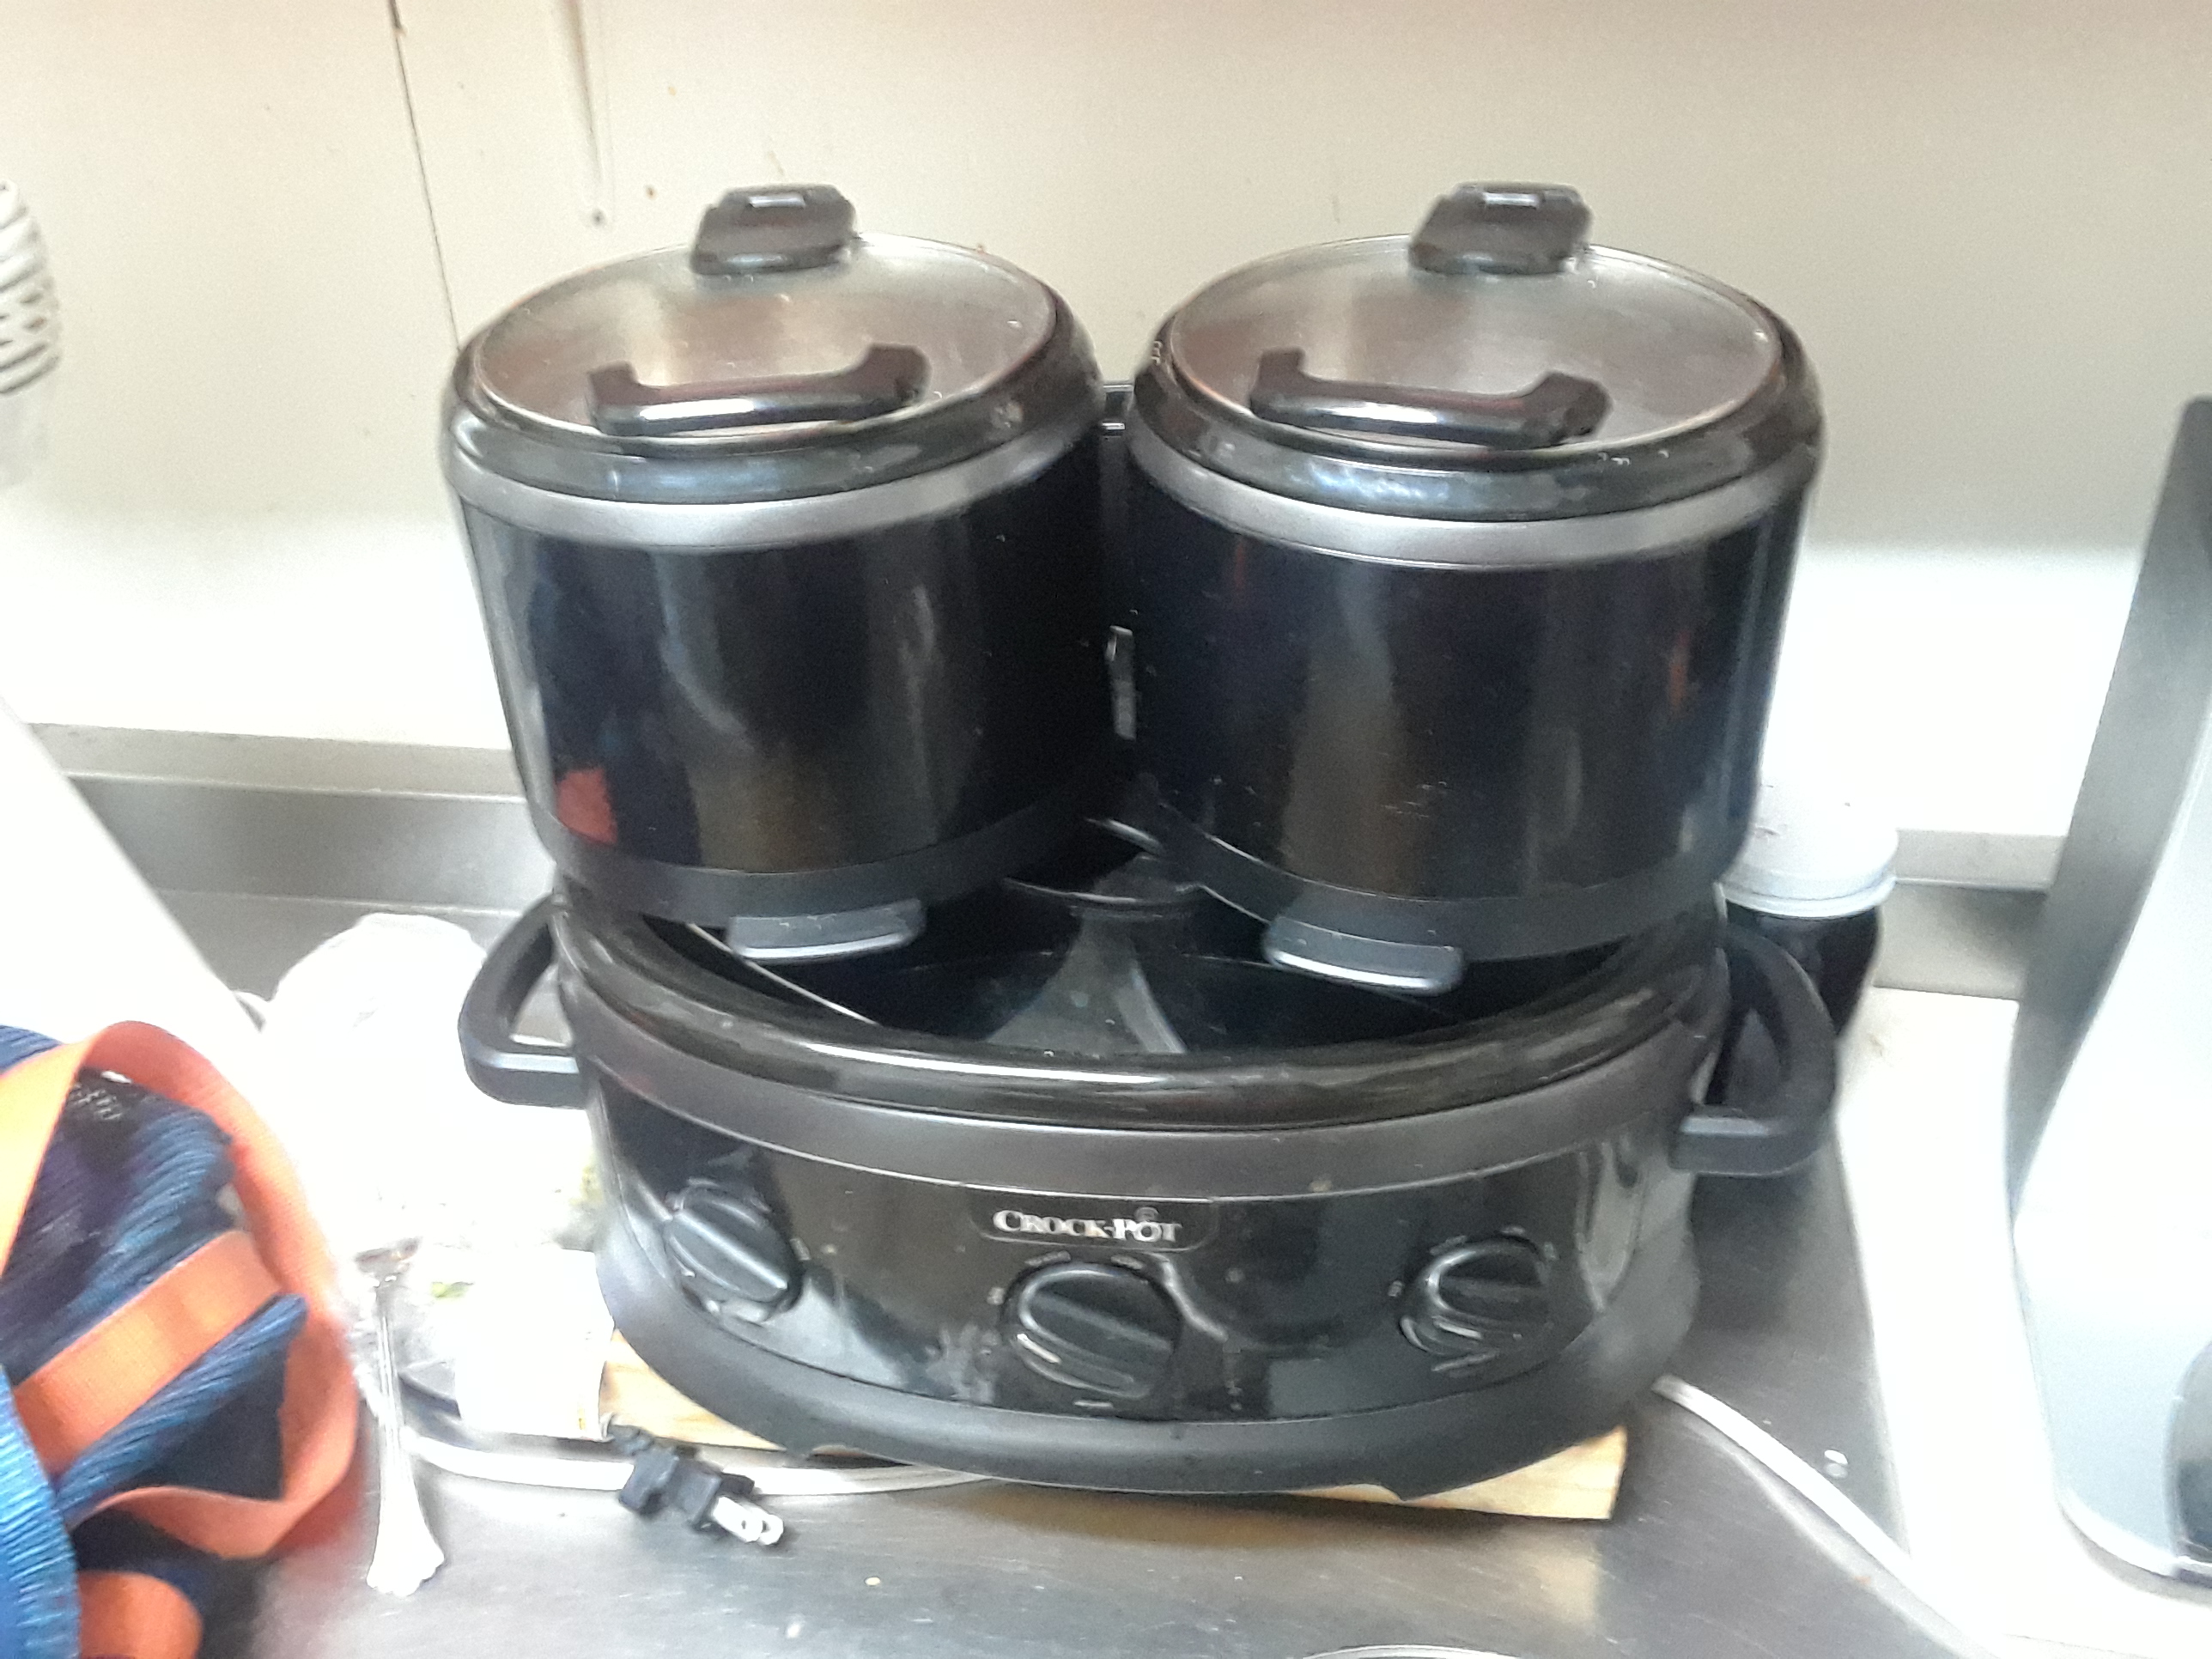 Triple Crock Pot Buffet Server Set